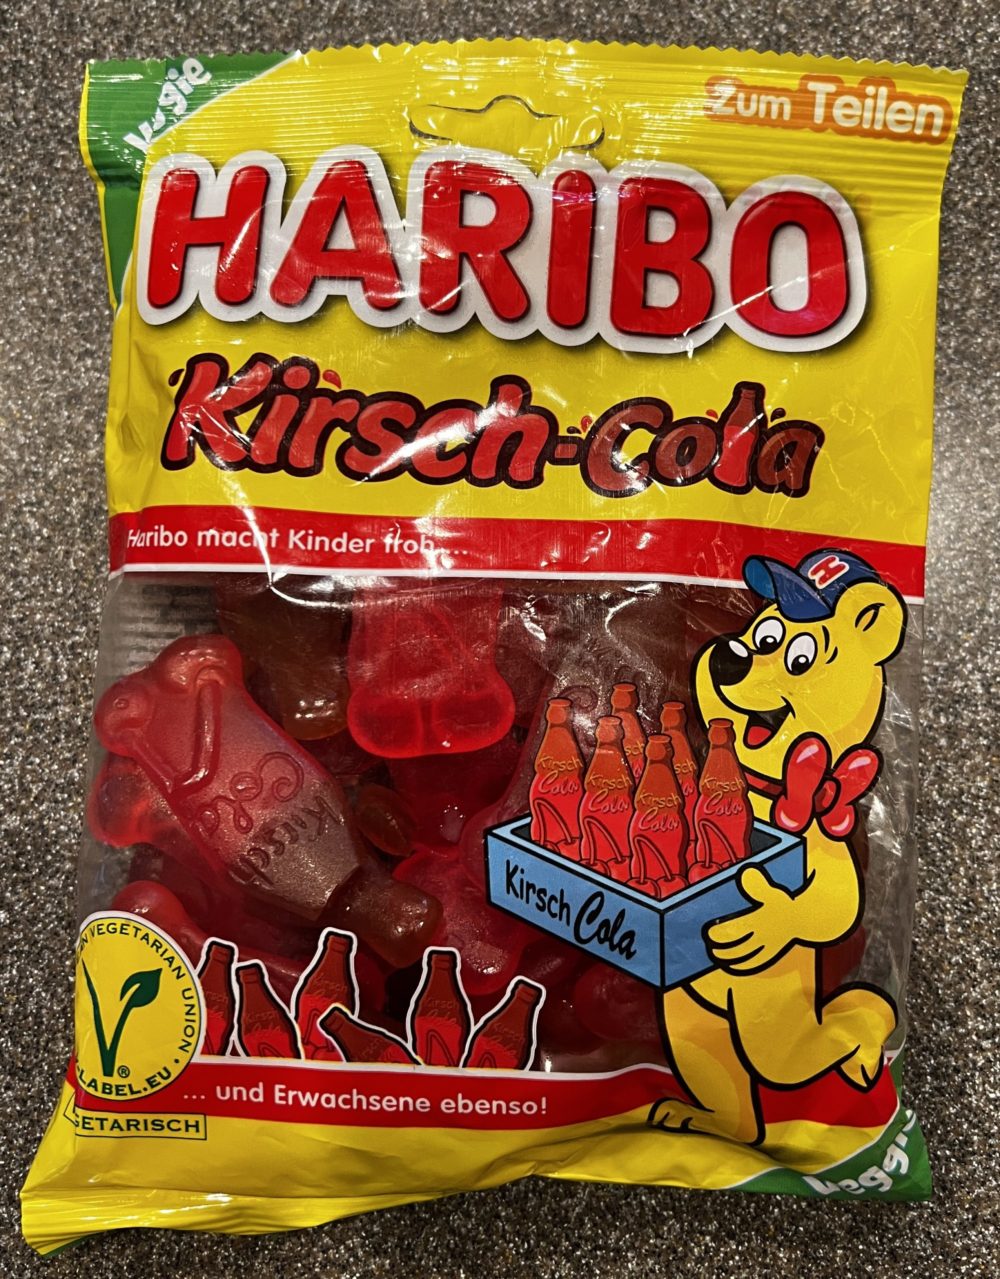 Haribo Cherry Cola